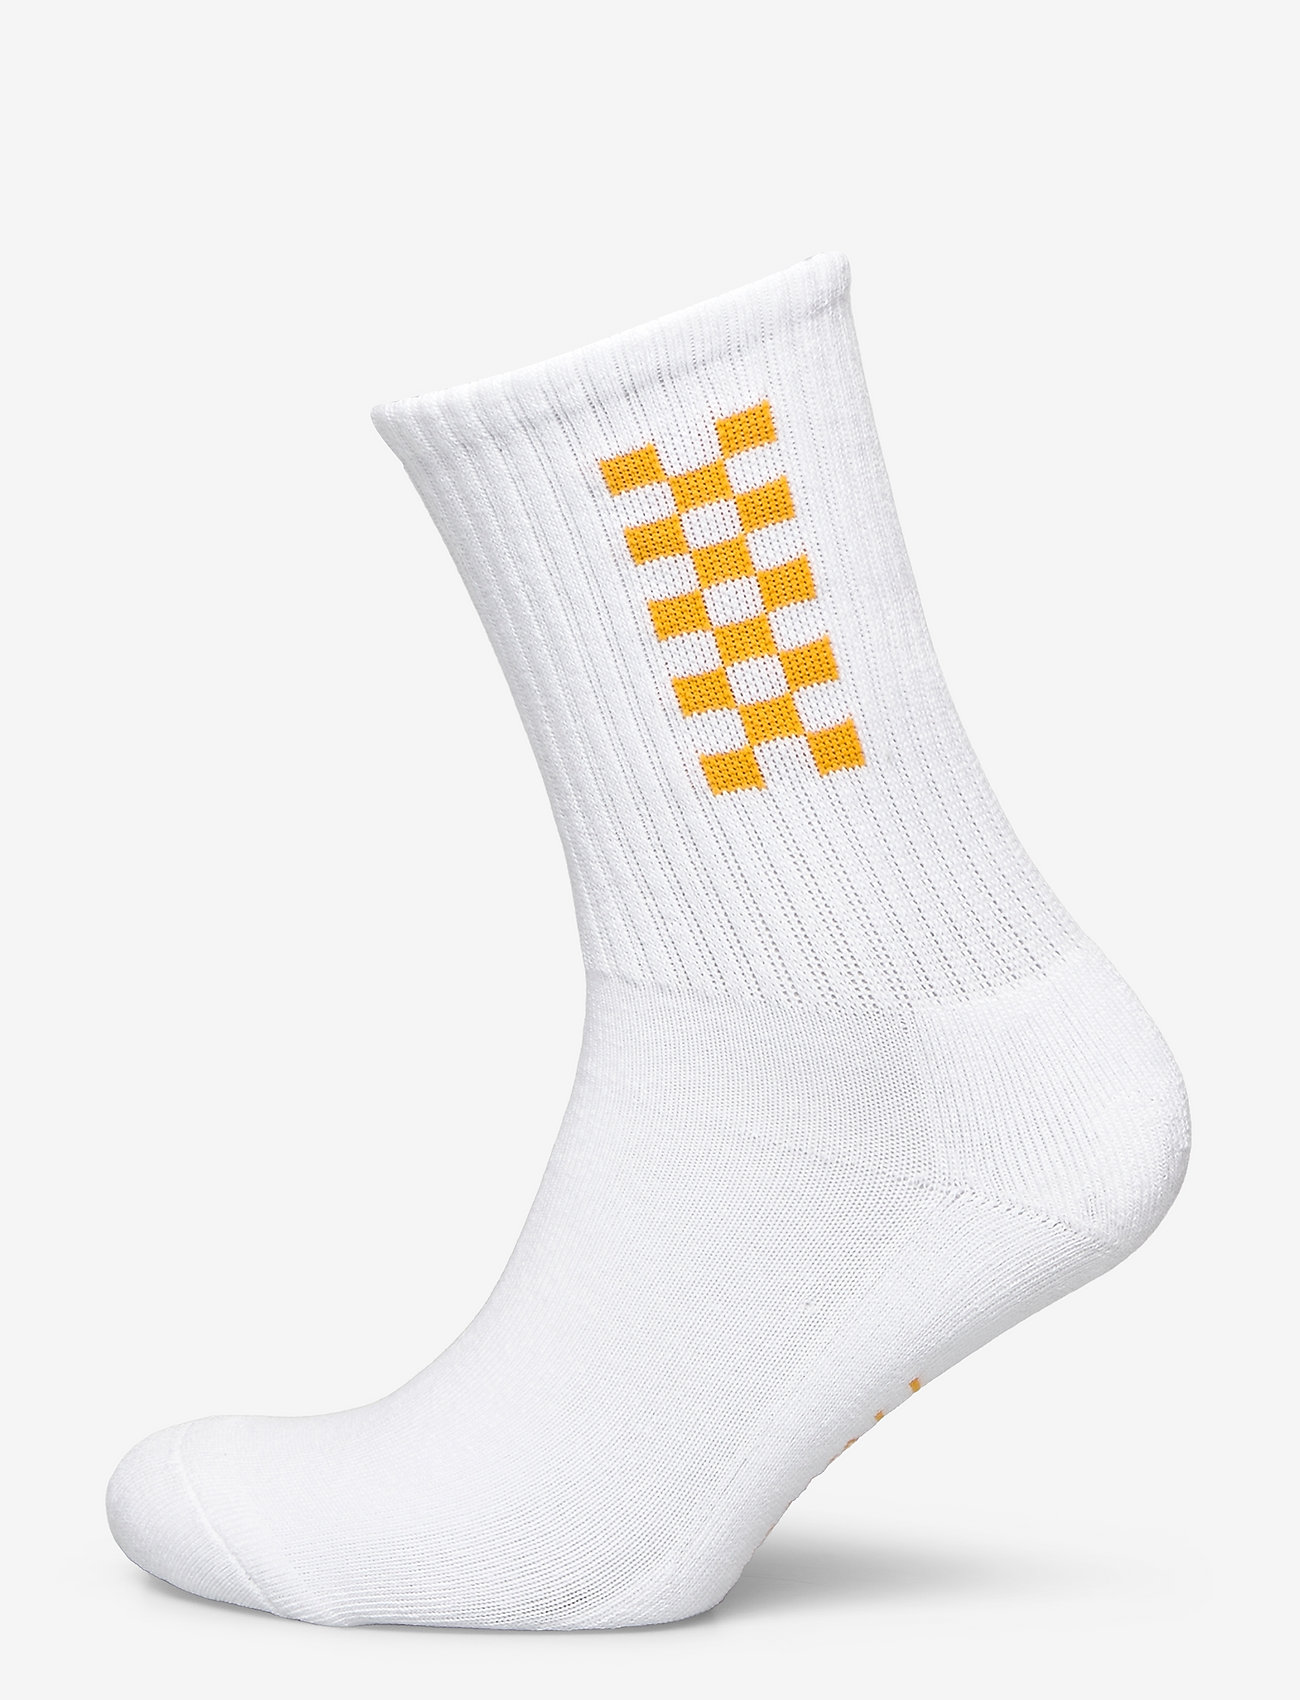 Socks Womens One - Boozt.com